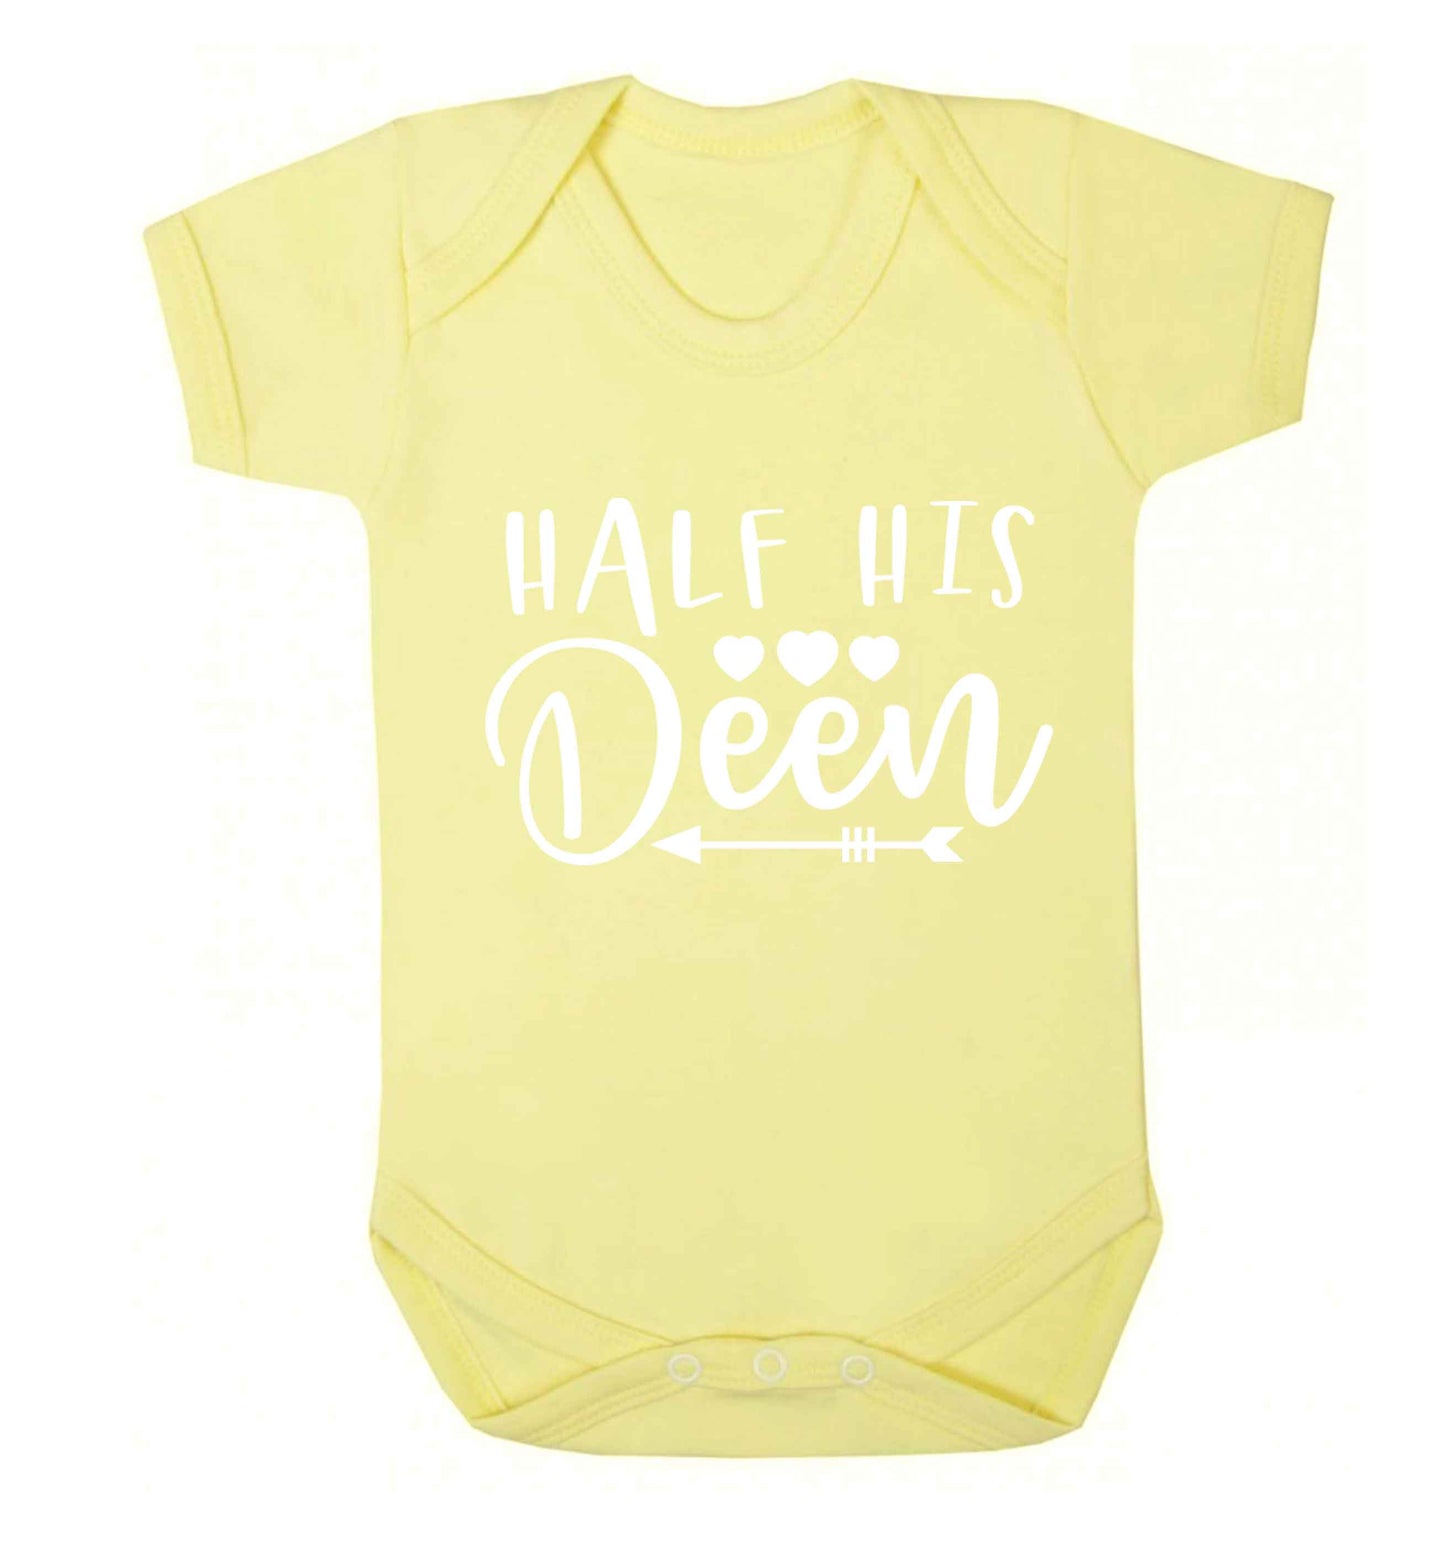 Half his deen Baby Vest pale yellow 18-24 months